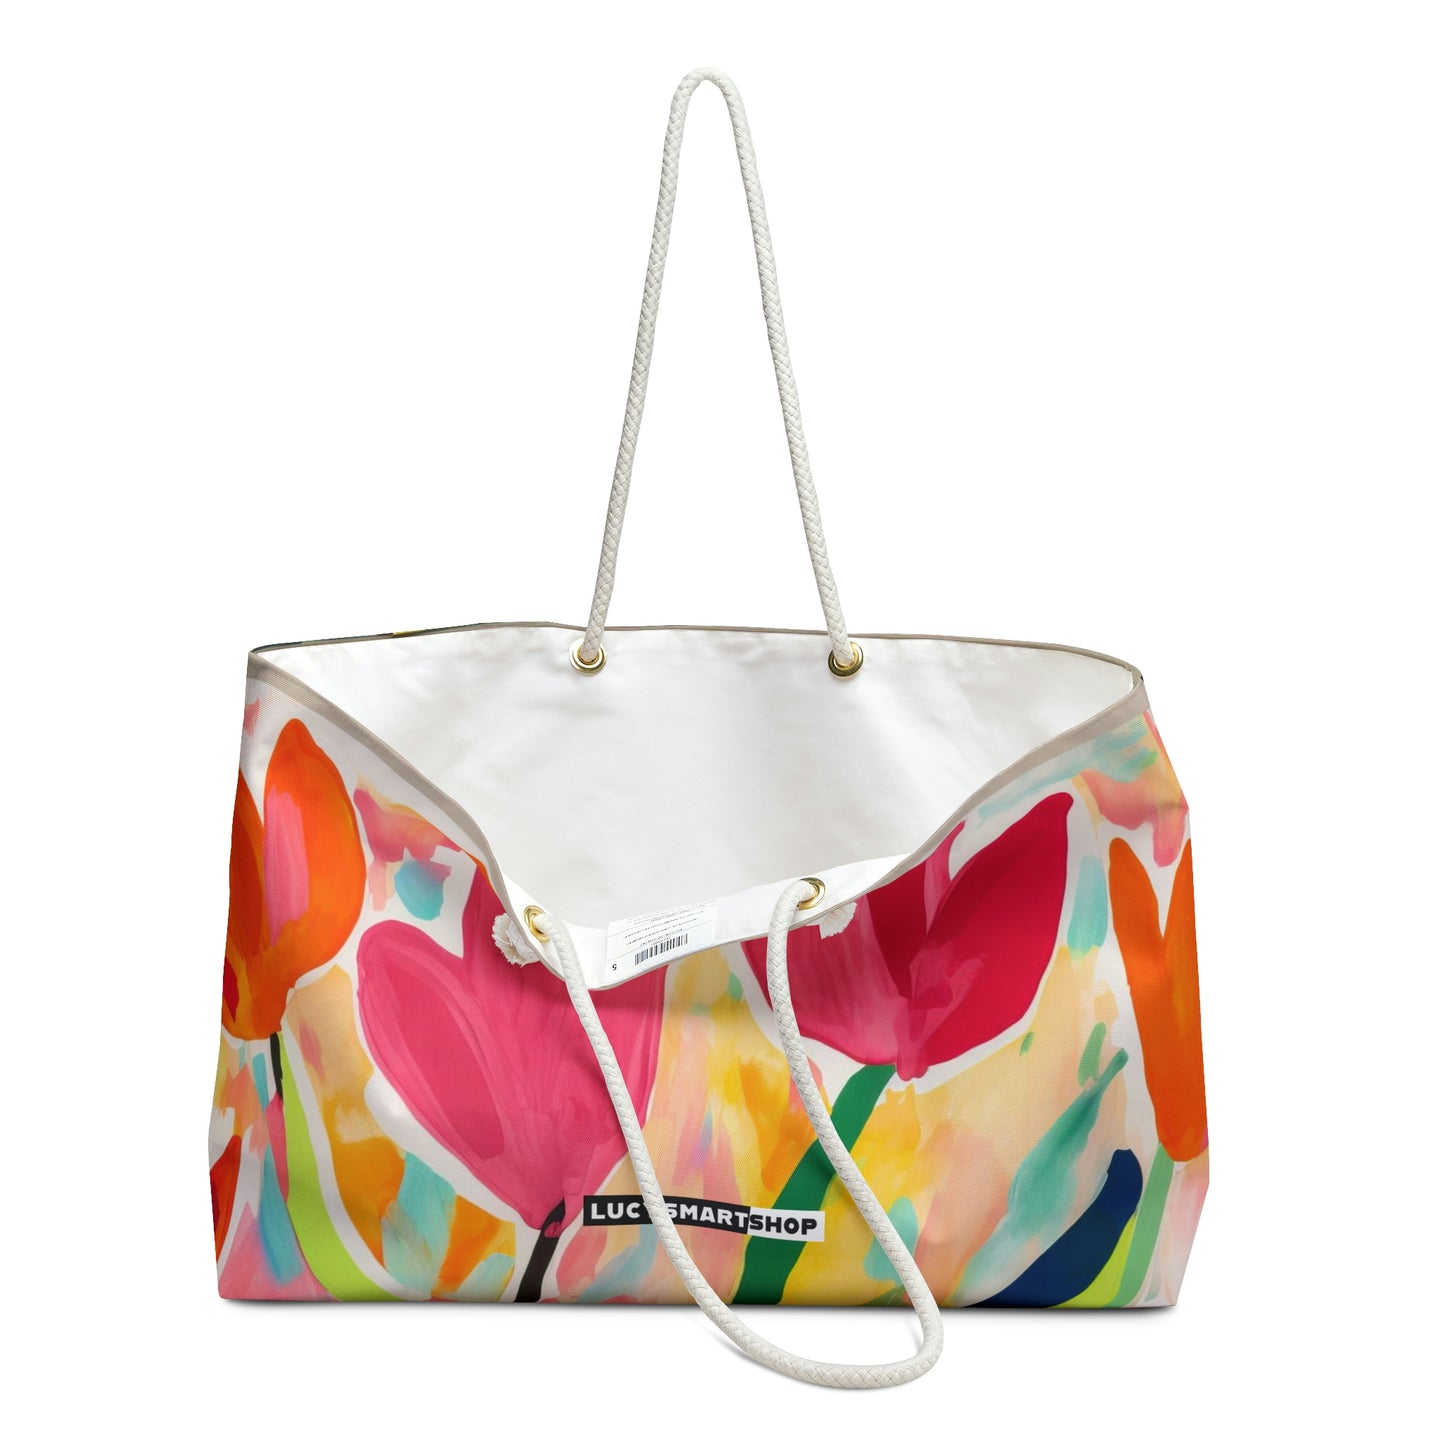 Tulips flower Tote Bag - Large capacity totte bag | Tulip Tote bag style #20230502